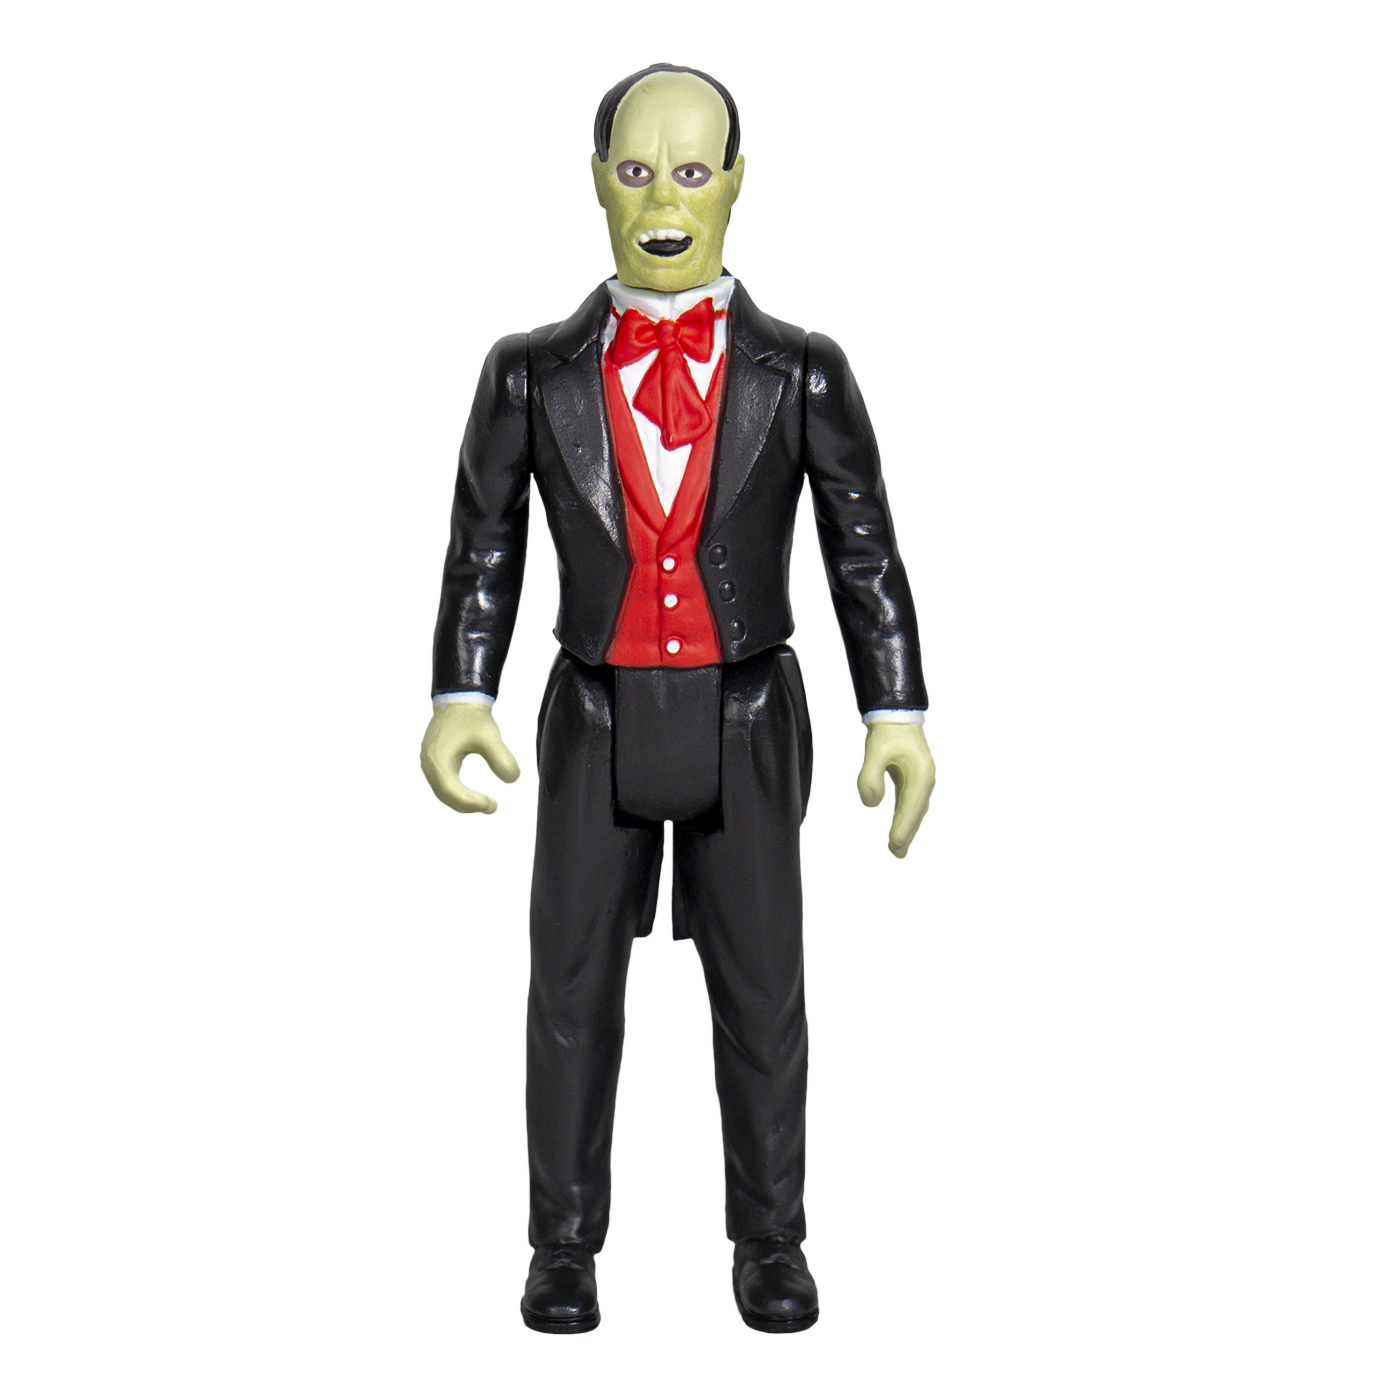 Universal Monsters ReAction Figure - The Phantom of the Opera